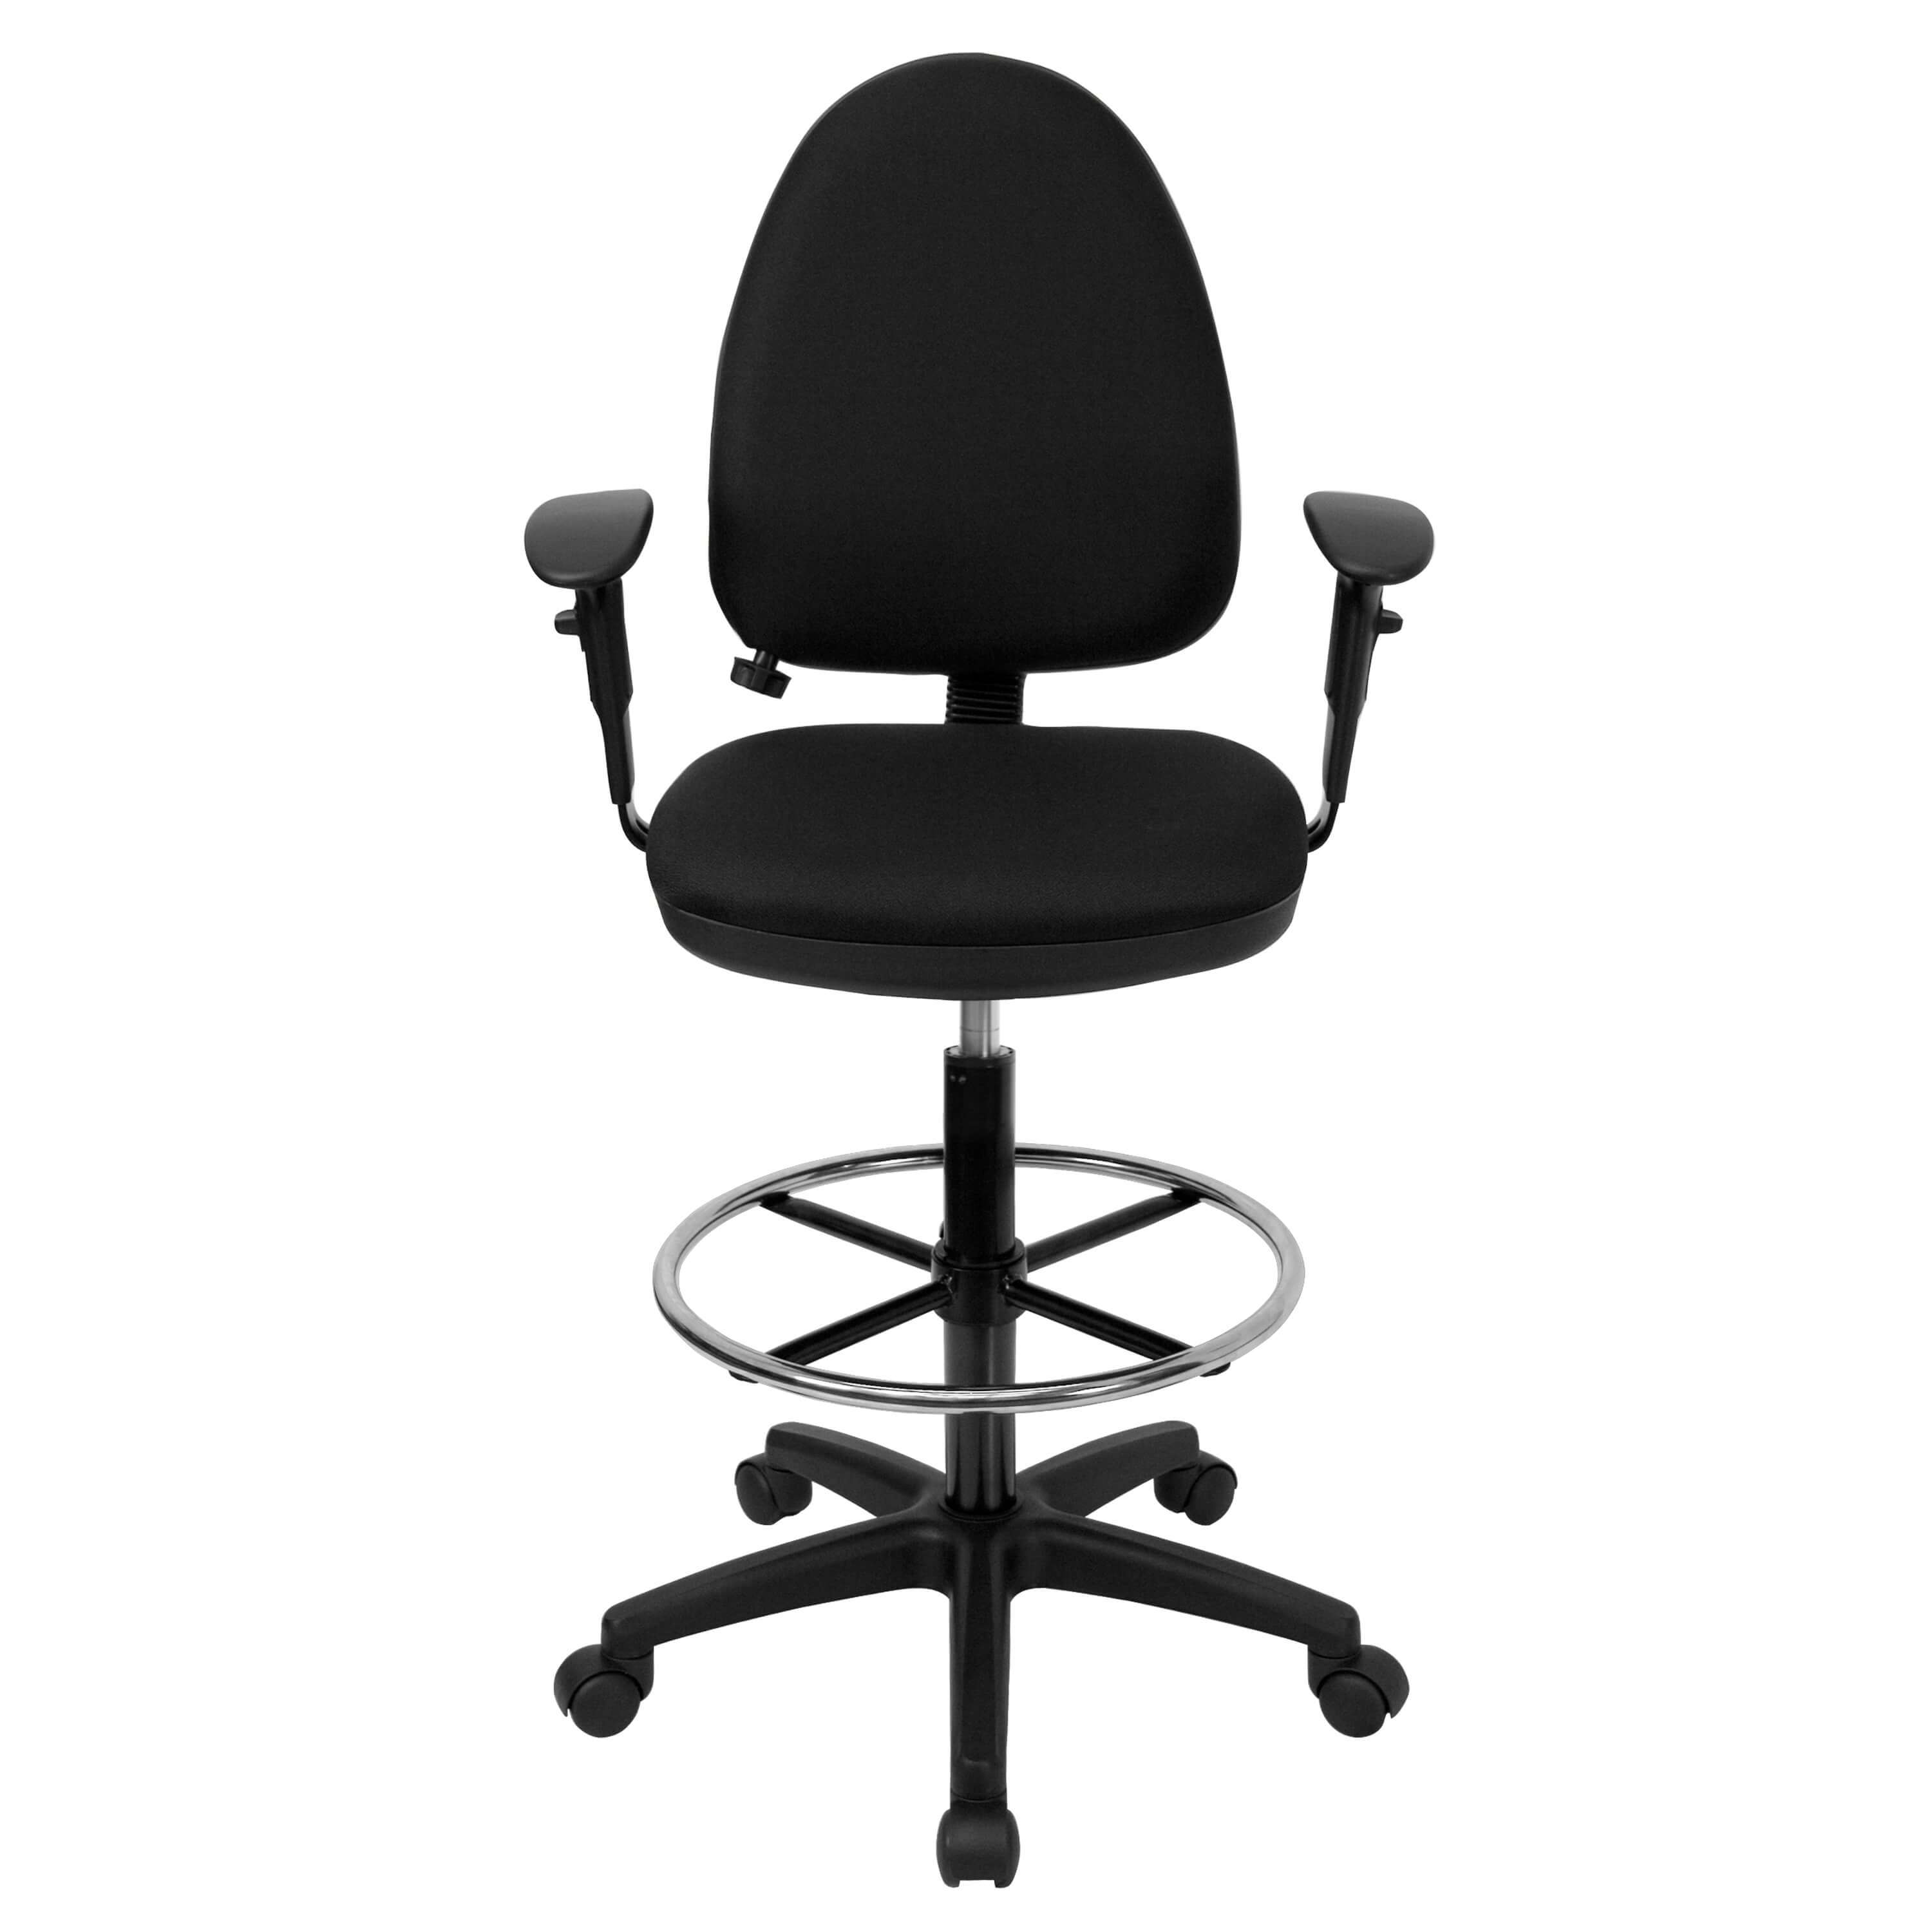 Cool desk chairs CUB WL A654MG BK AD GG FLA